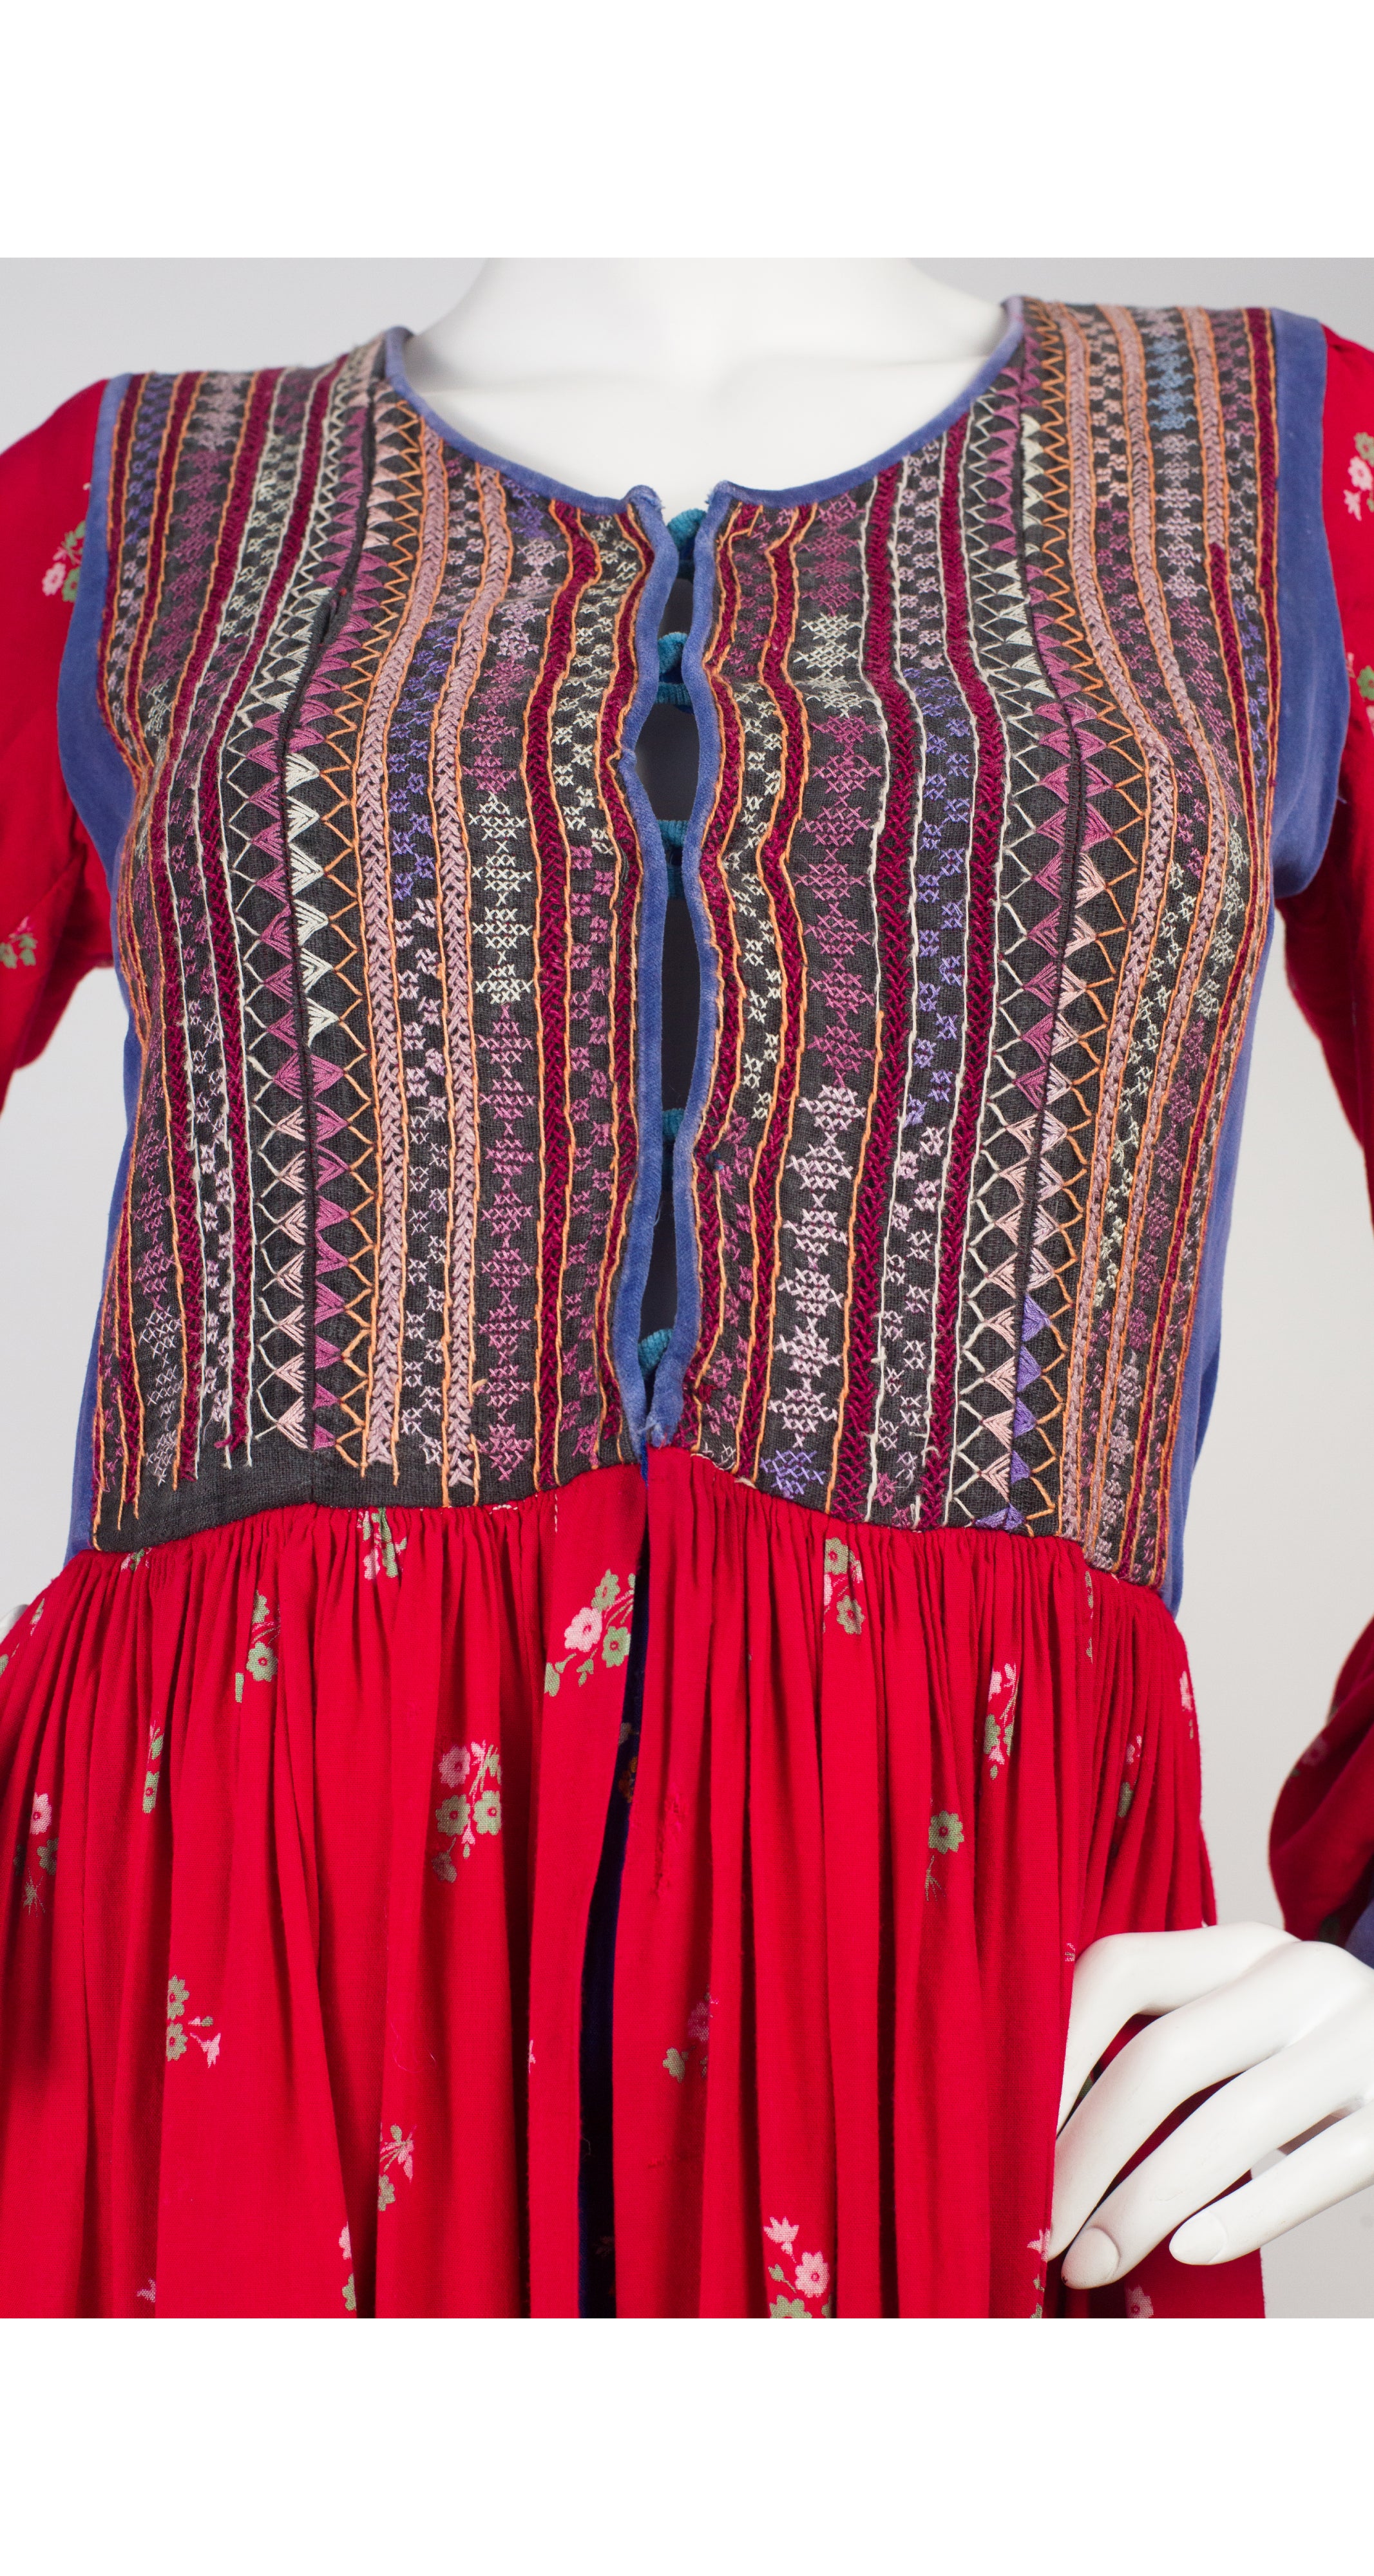 1970s Kuchi-Style Embroidered Floral Cotton & Velvet Dress